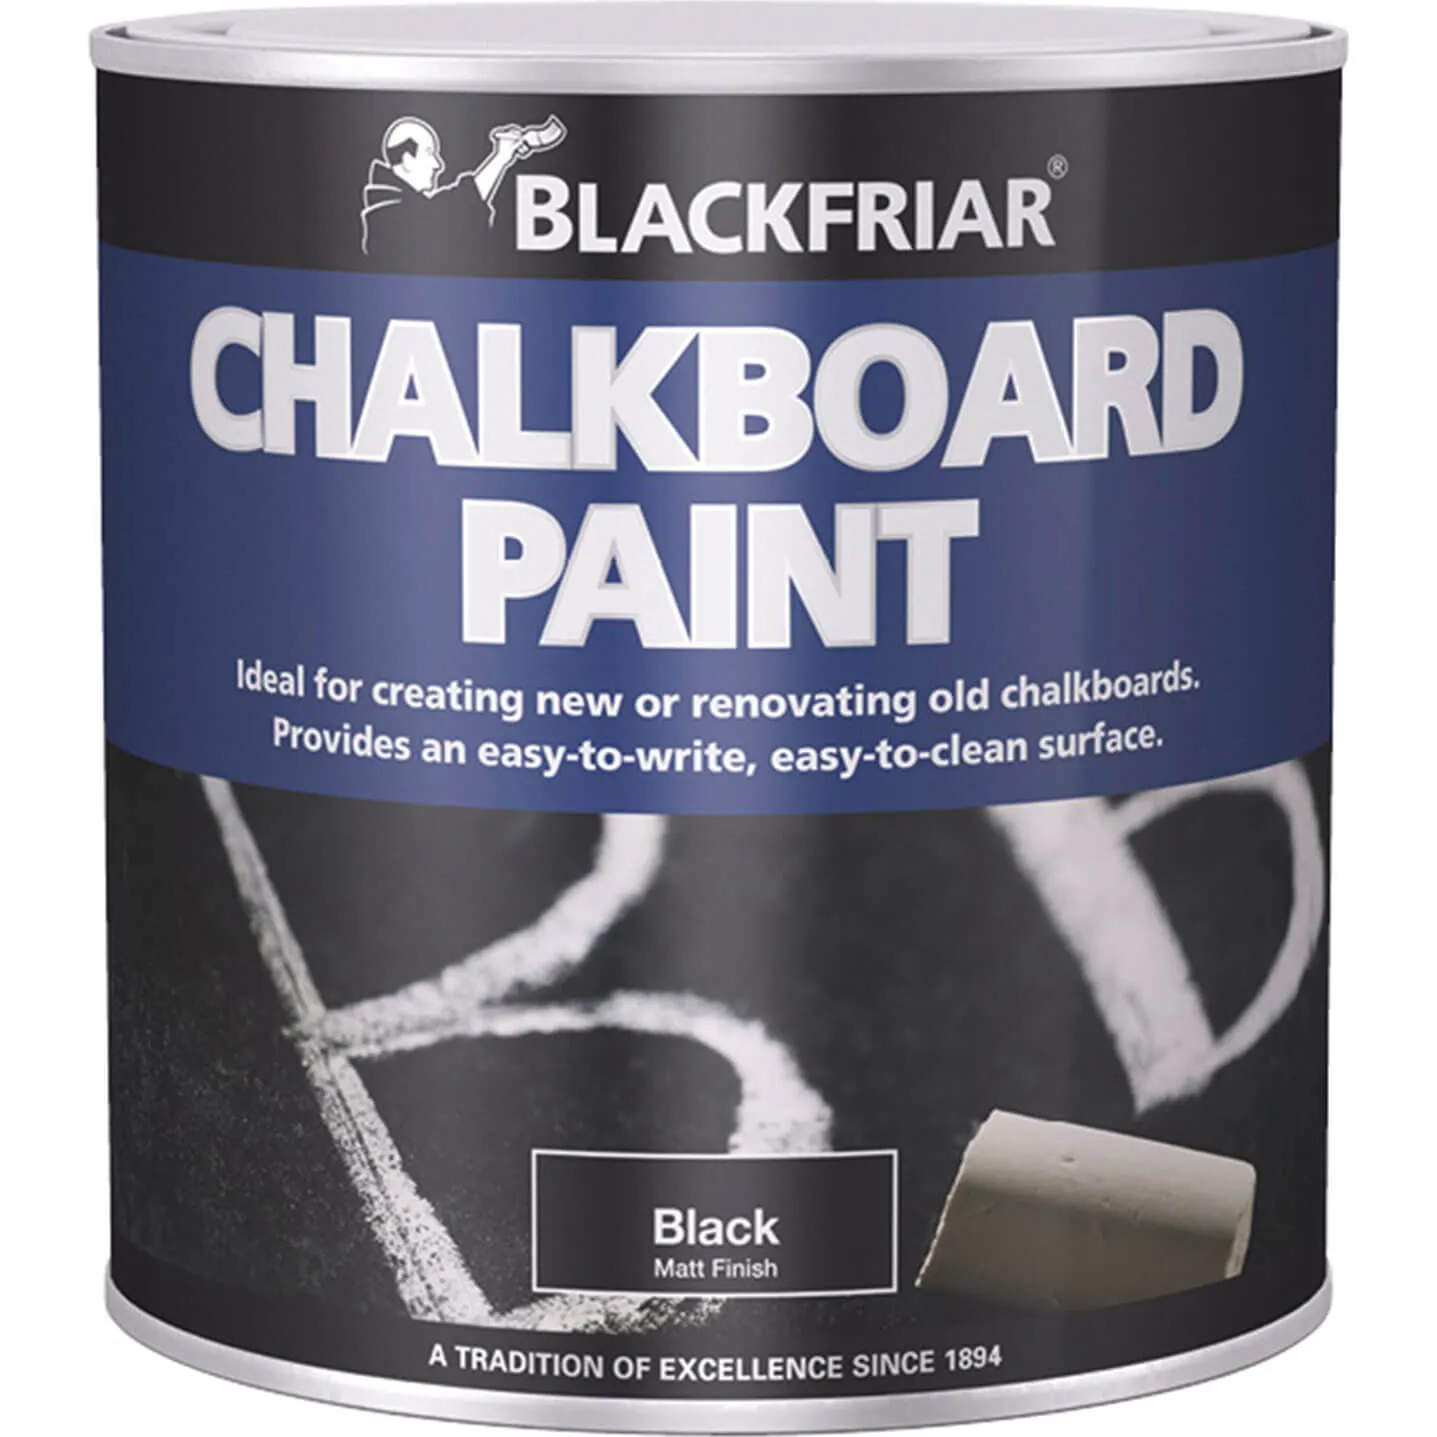 Blackfriar Chalkboard Paint for Renovating or Creating Chalkboards - Black, 500ml